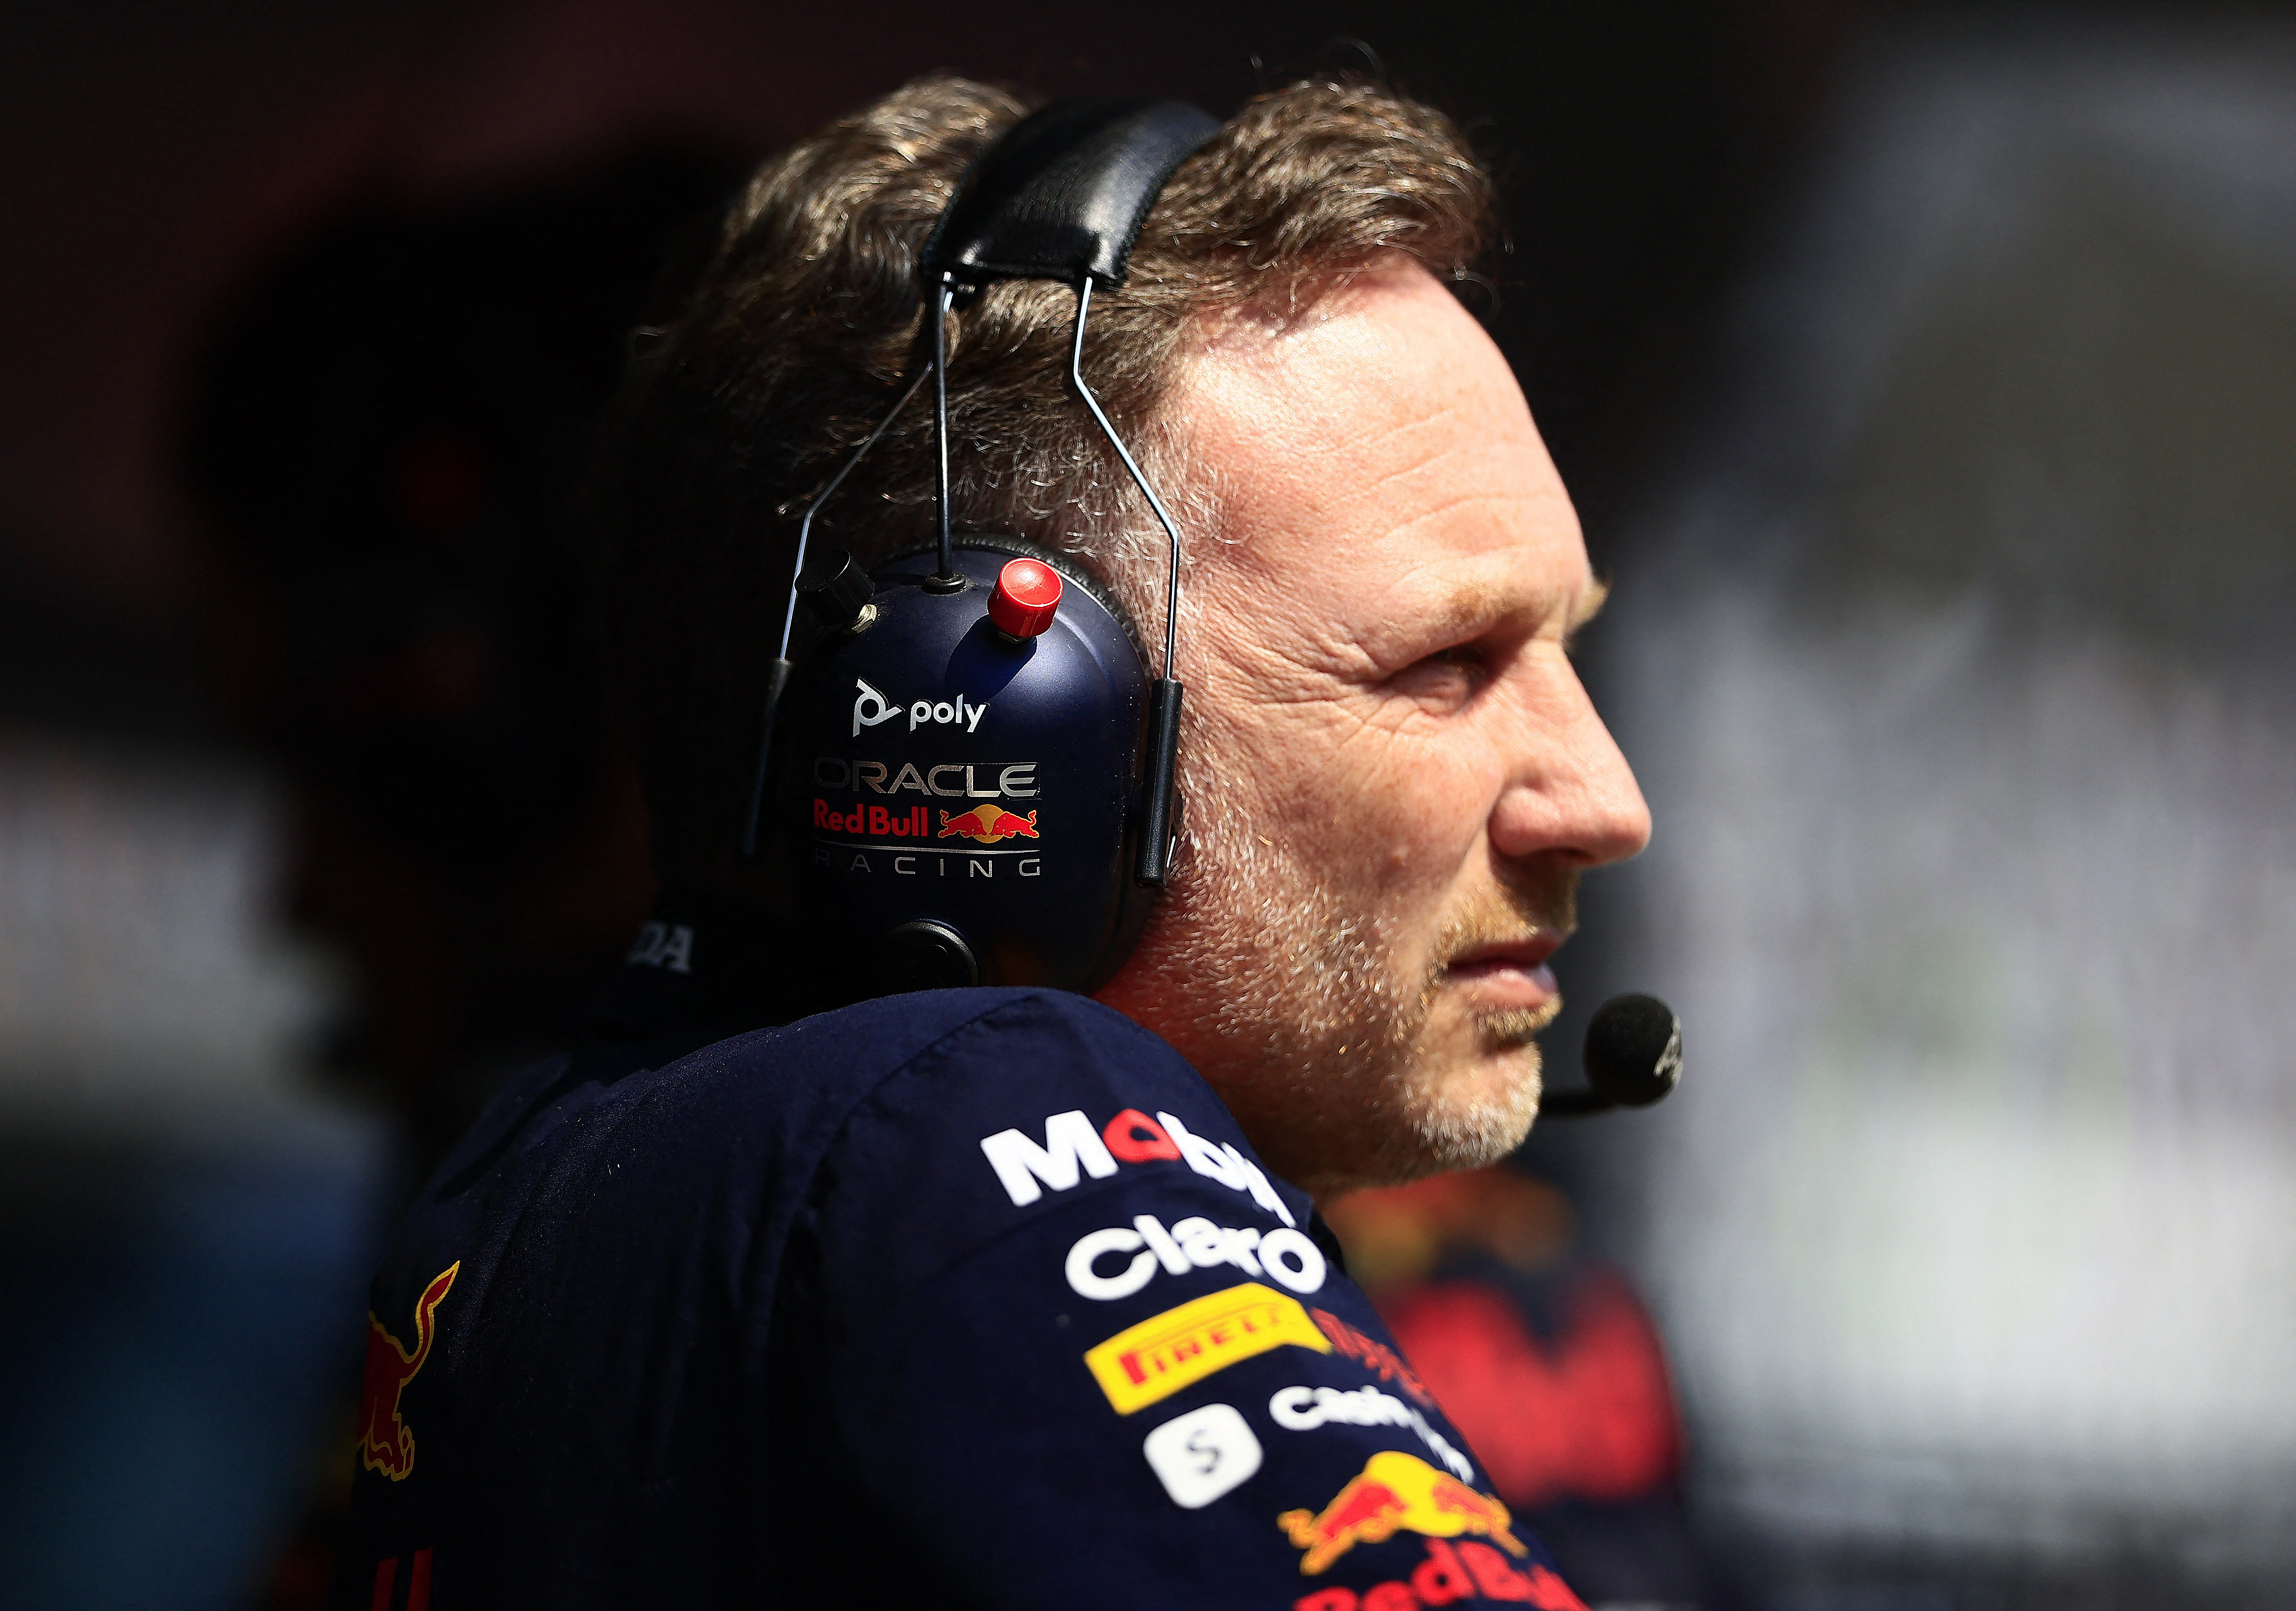 Horner aseguró que en Red Bull nadie es superior (Foto: REUTERS/Carlos Perez Gallardo/Pool)